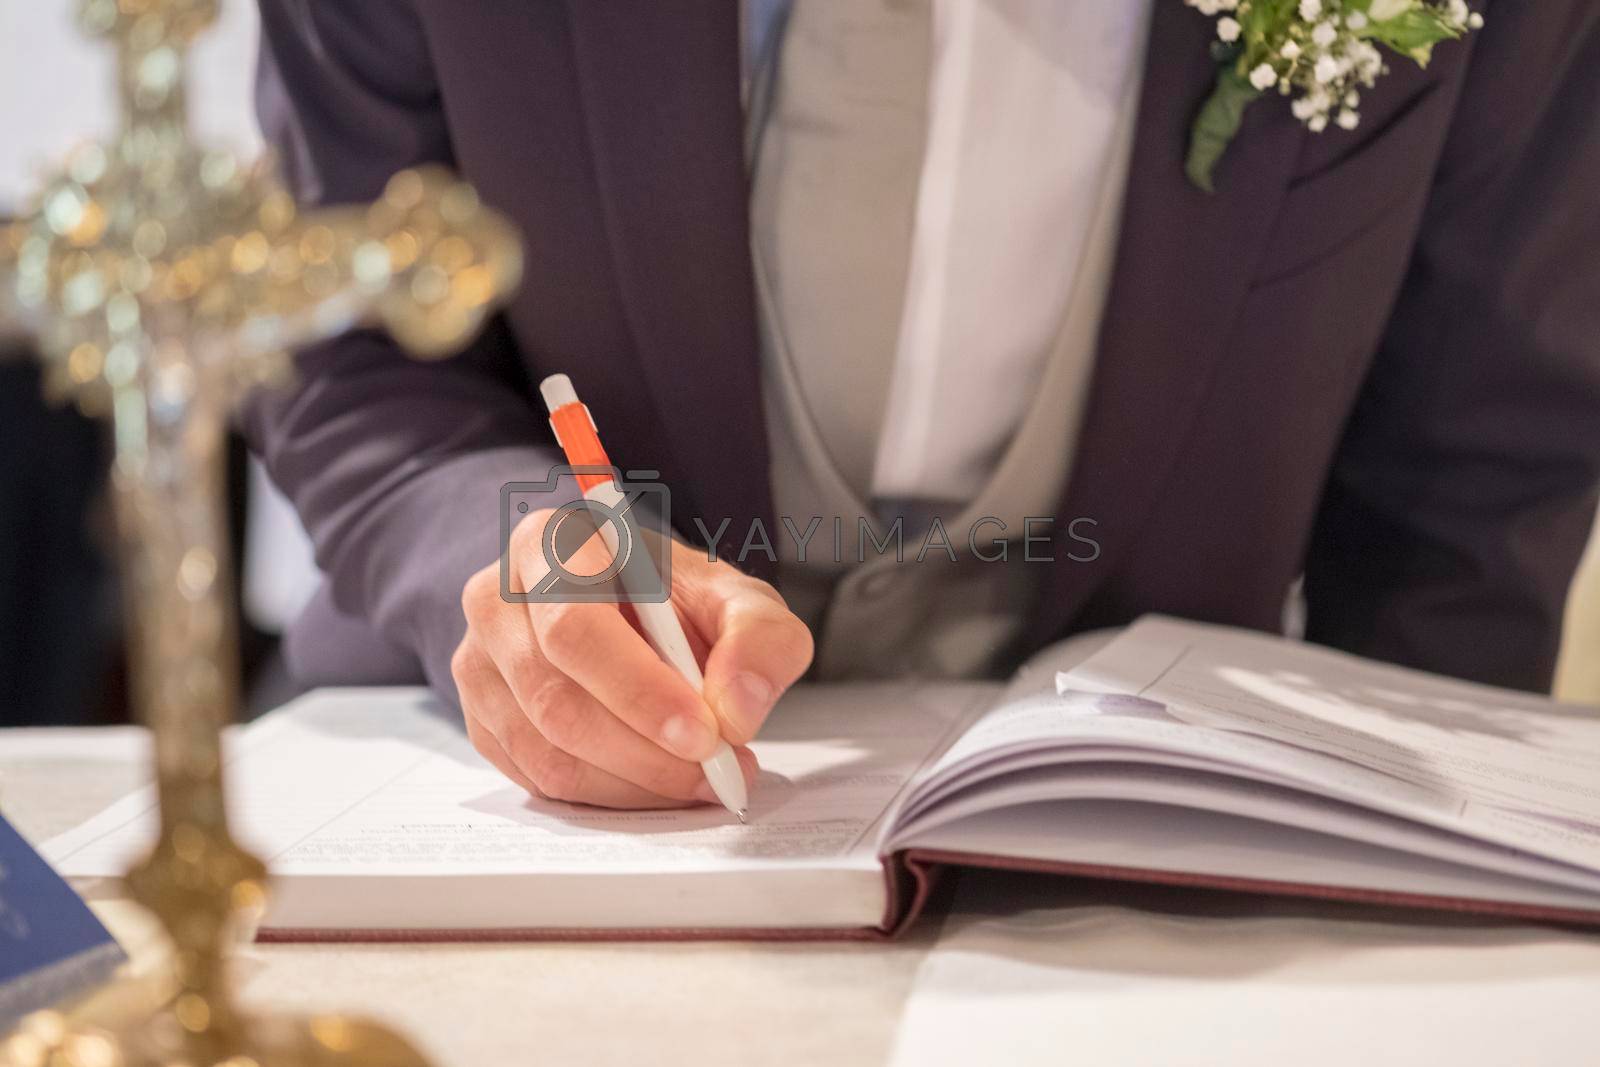 Royalty free image of wedding best man groom signing register in catholic wedding by tinofotografie